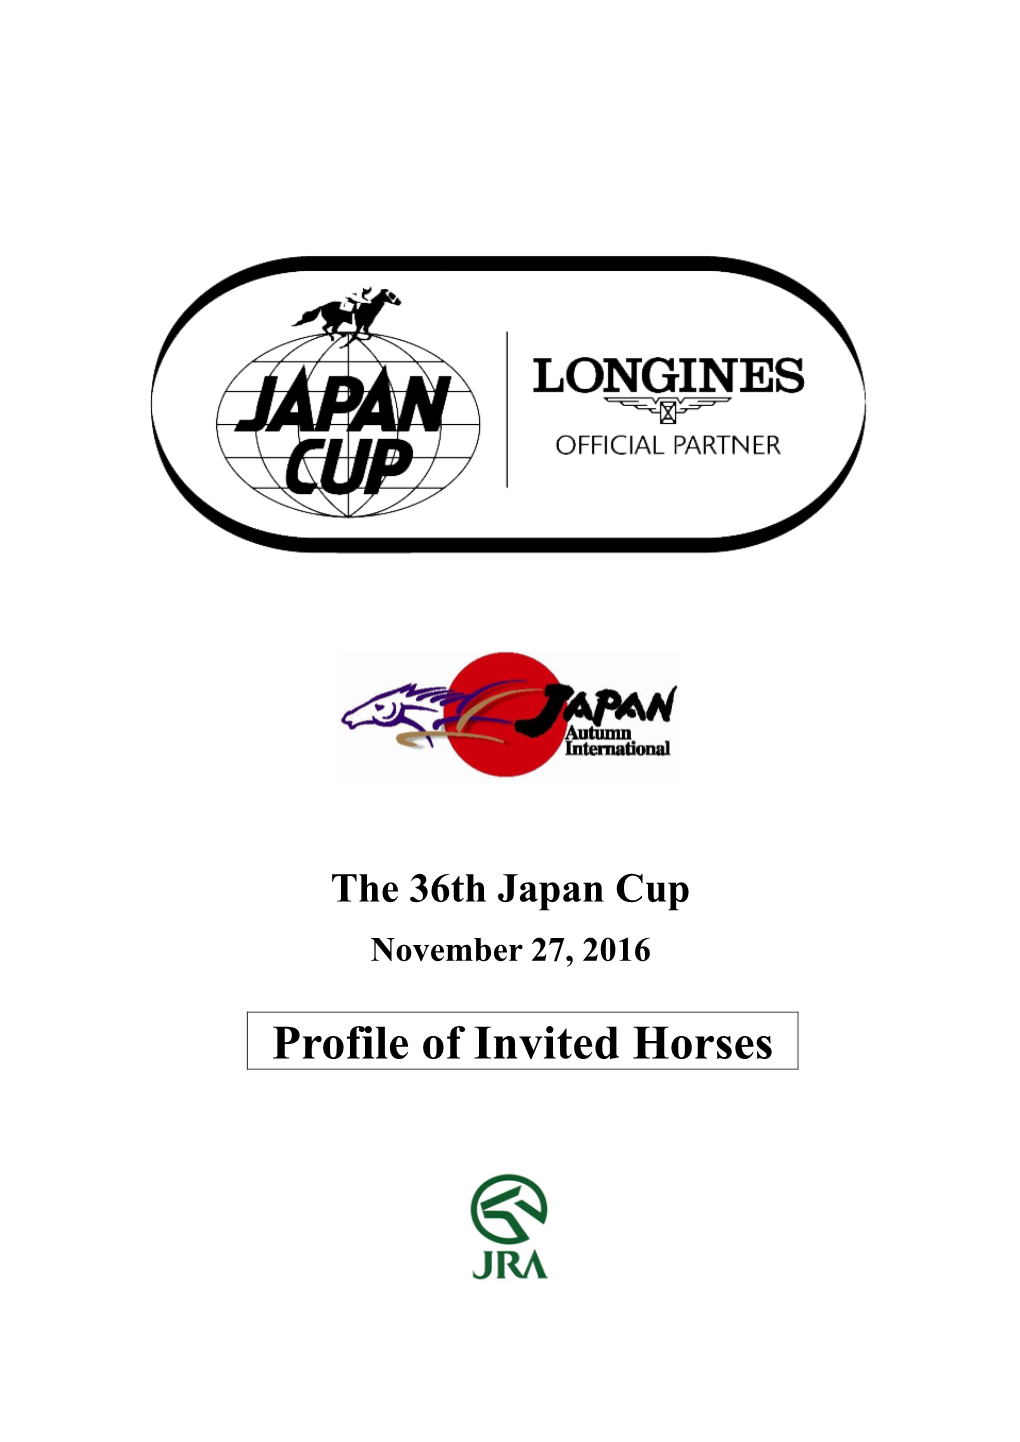 Japan Cup (G1) 11.29 (JPN) Firm (55.0) Shonan Pandora (2) Longchamp 2400 S